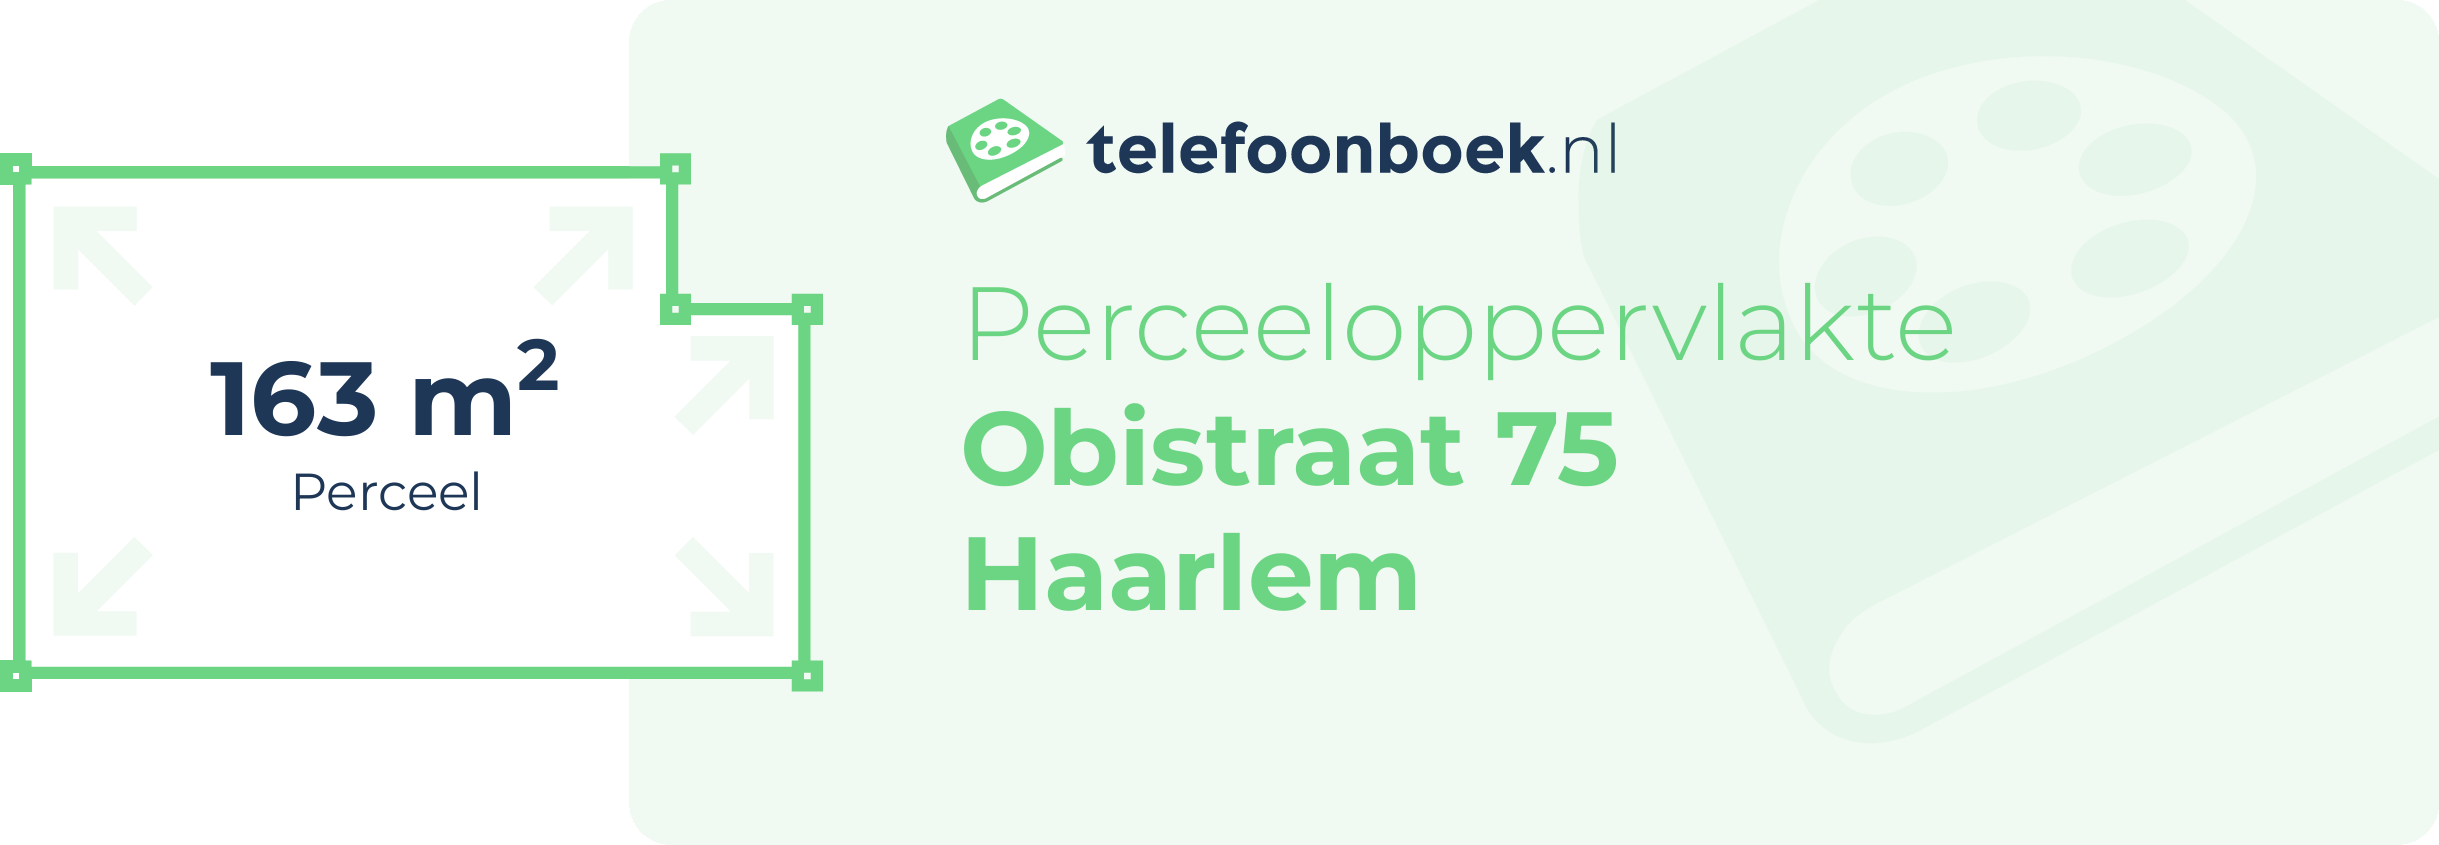 Perceeloppervlakte Obistraat 75 Haarlem